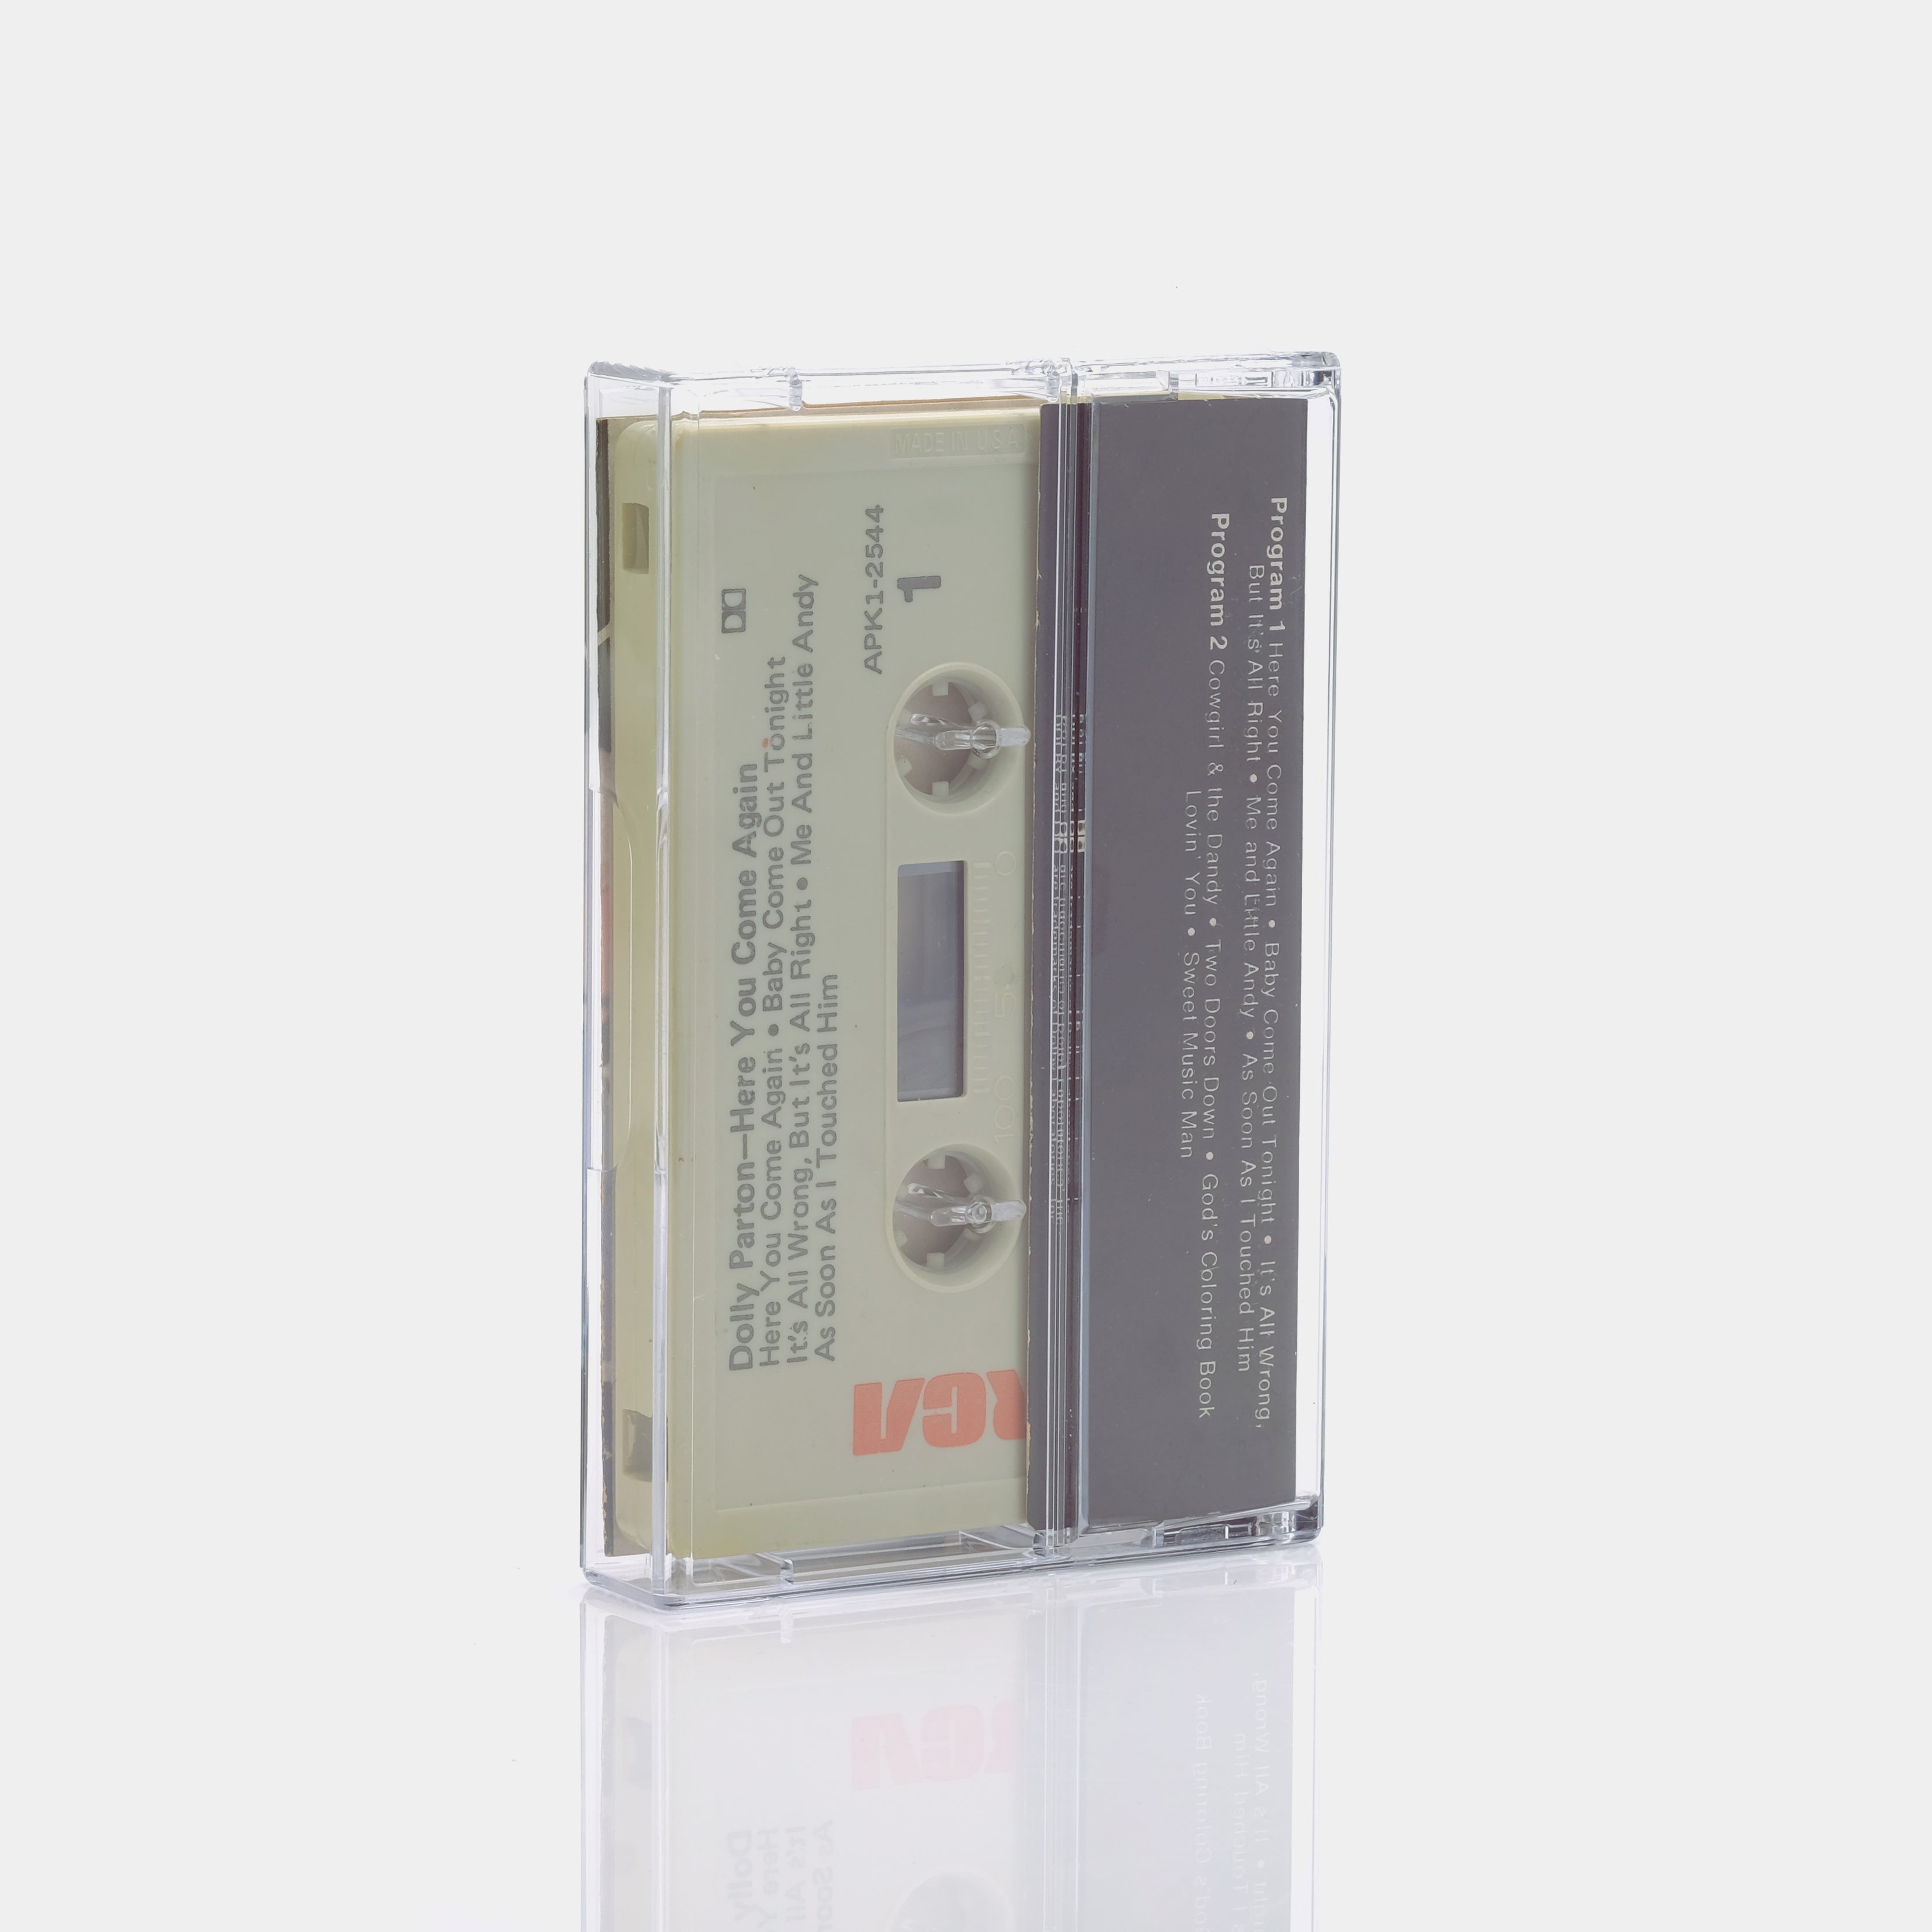 Elvis Costello - My Aim Is True Cassette Tape